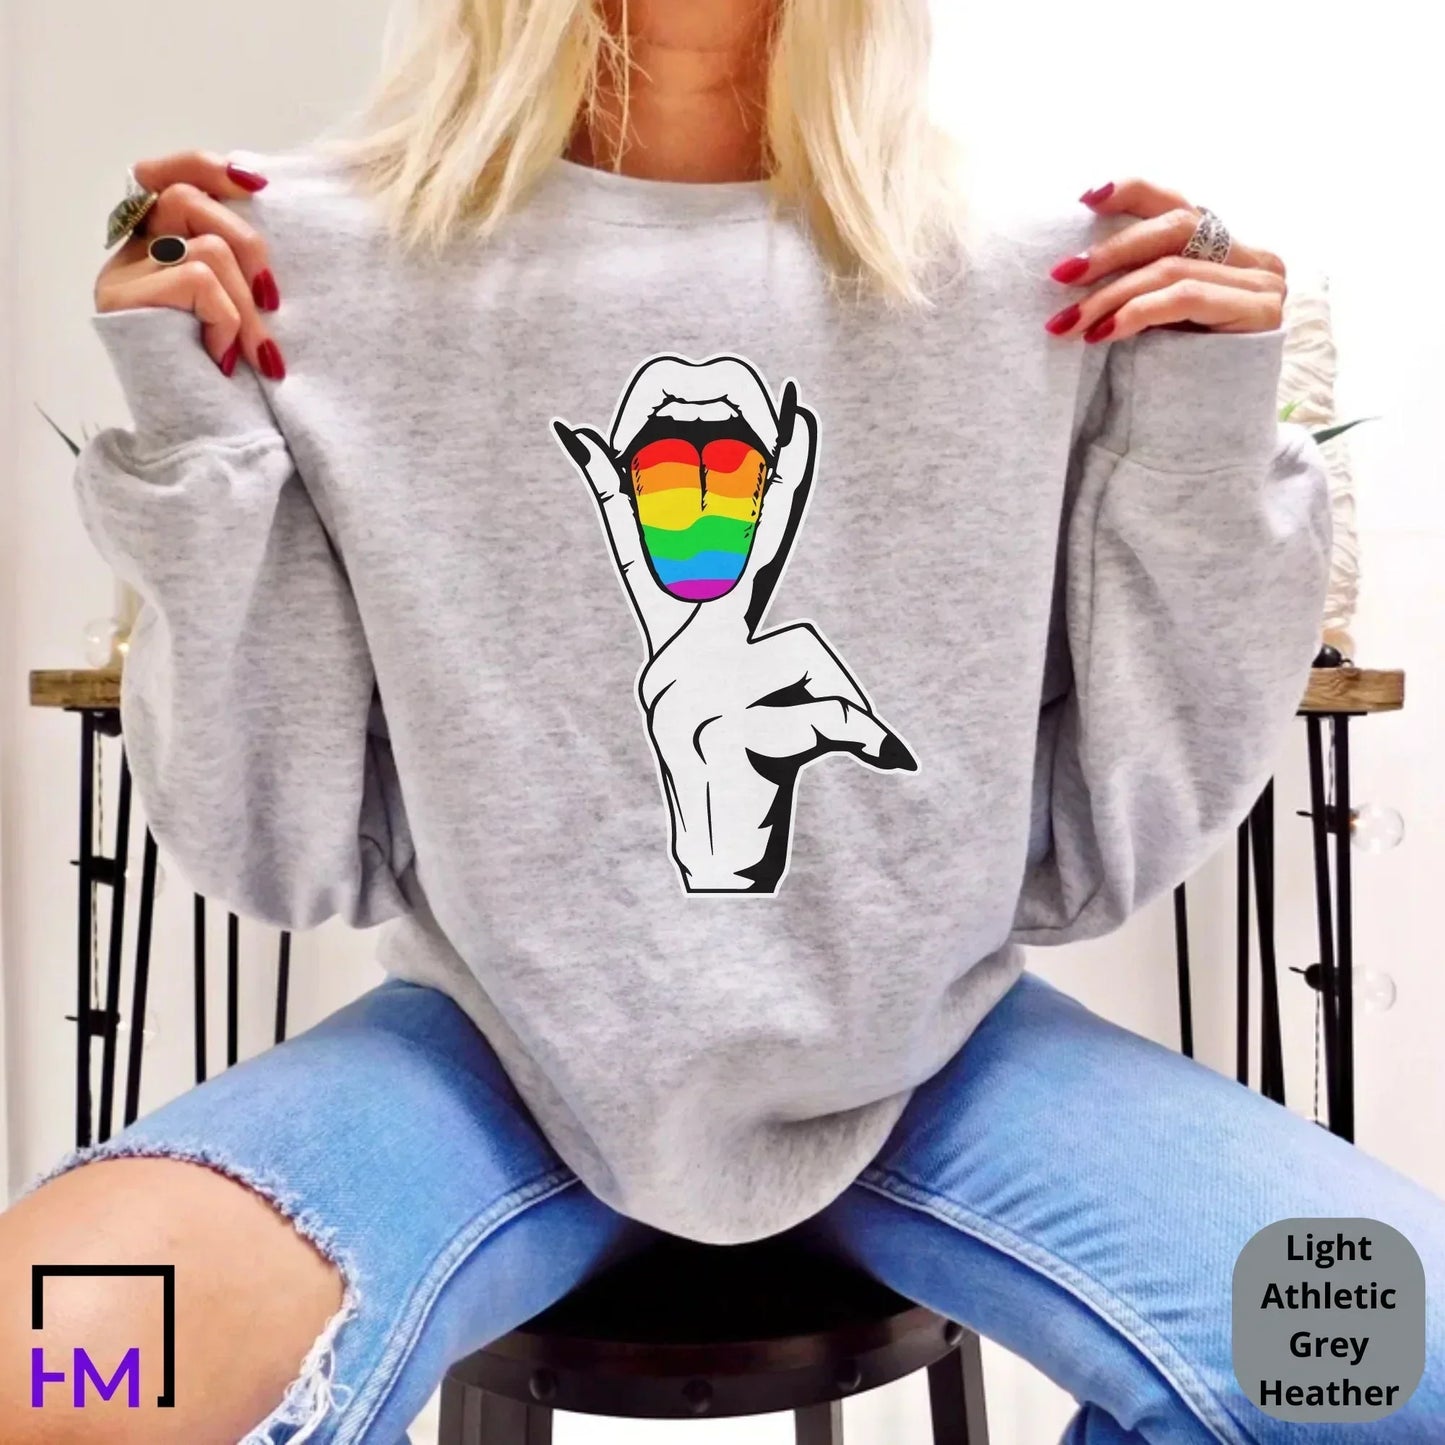 Lesbian Shirt, Peace Rainbow, Human Rights Love is Love Shirt, Retro Hippie Shirt, Equality T-Shirt, LGBTQ Support Shirts, LGBTQ Pride Tees